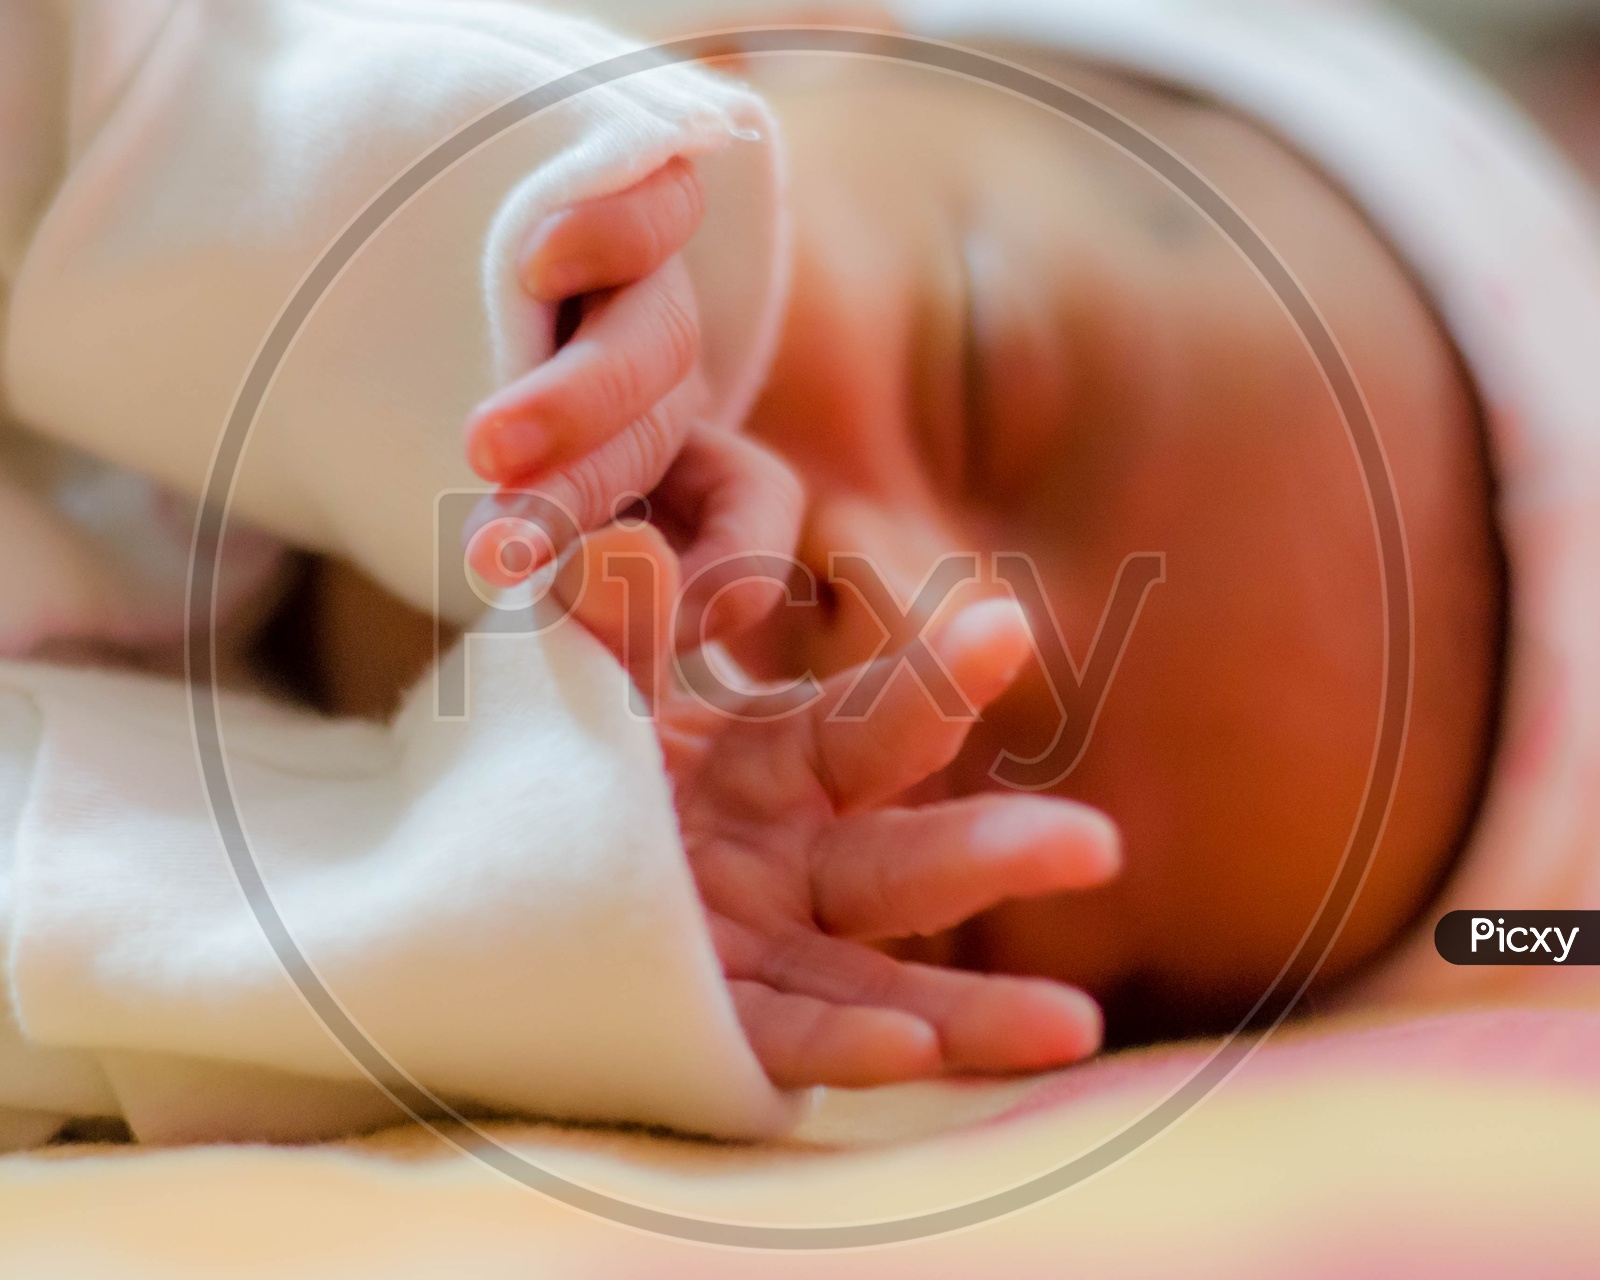 Hands Closeup Of a Sleeping Baby